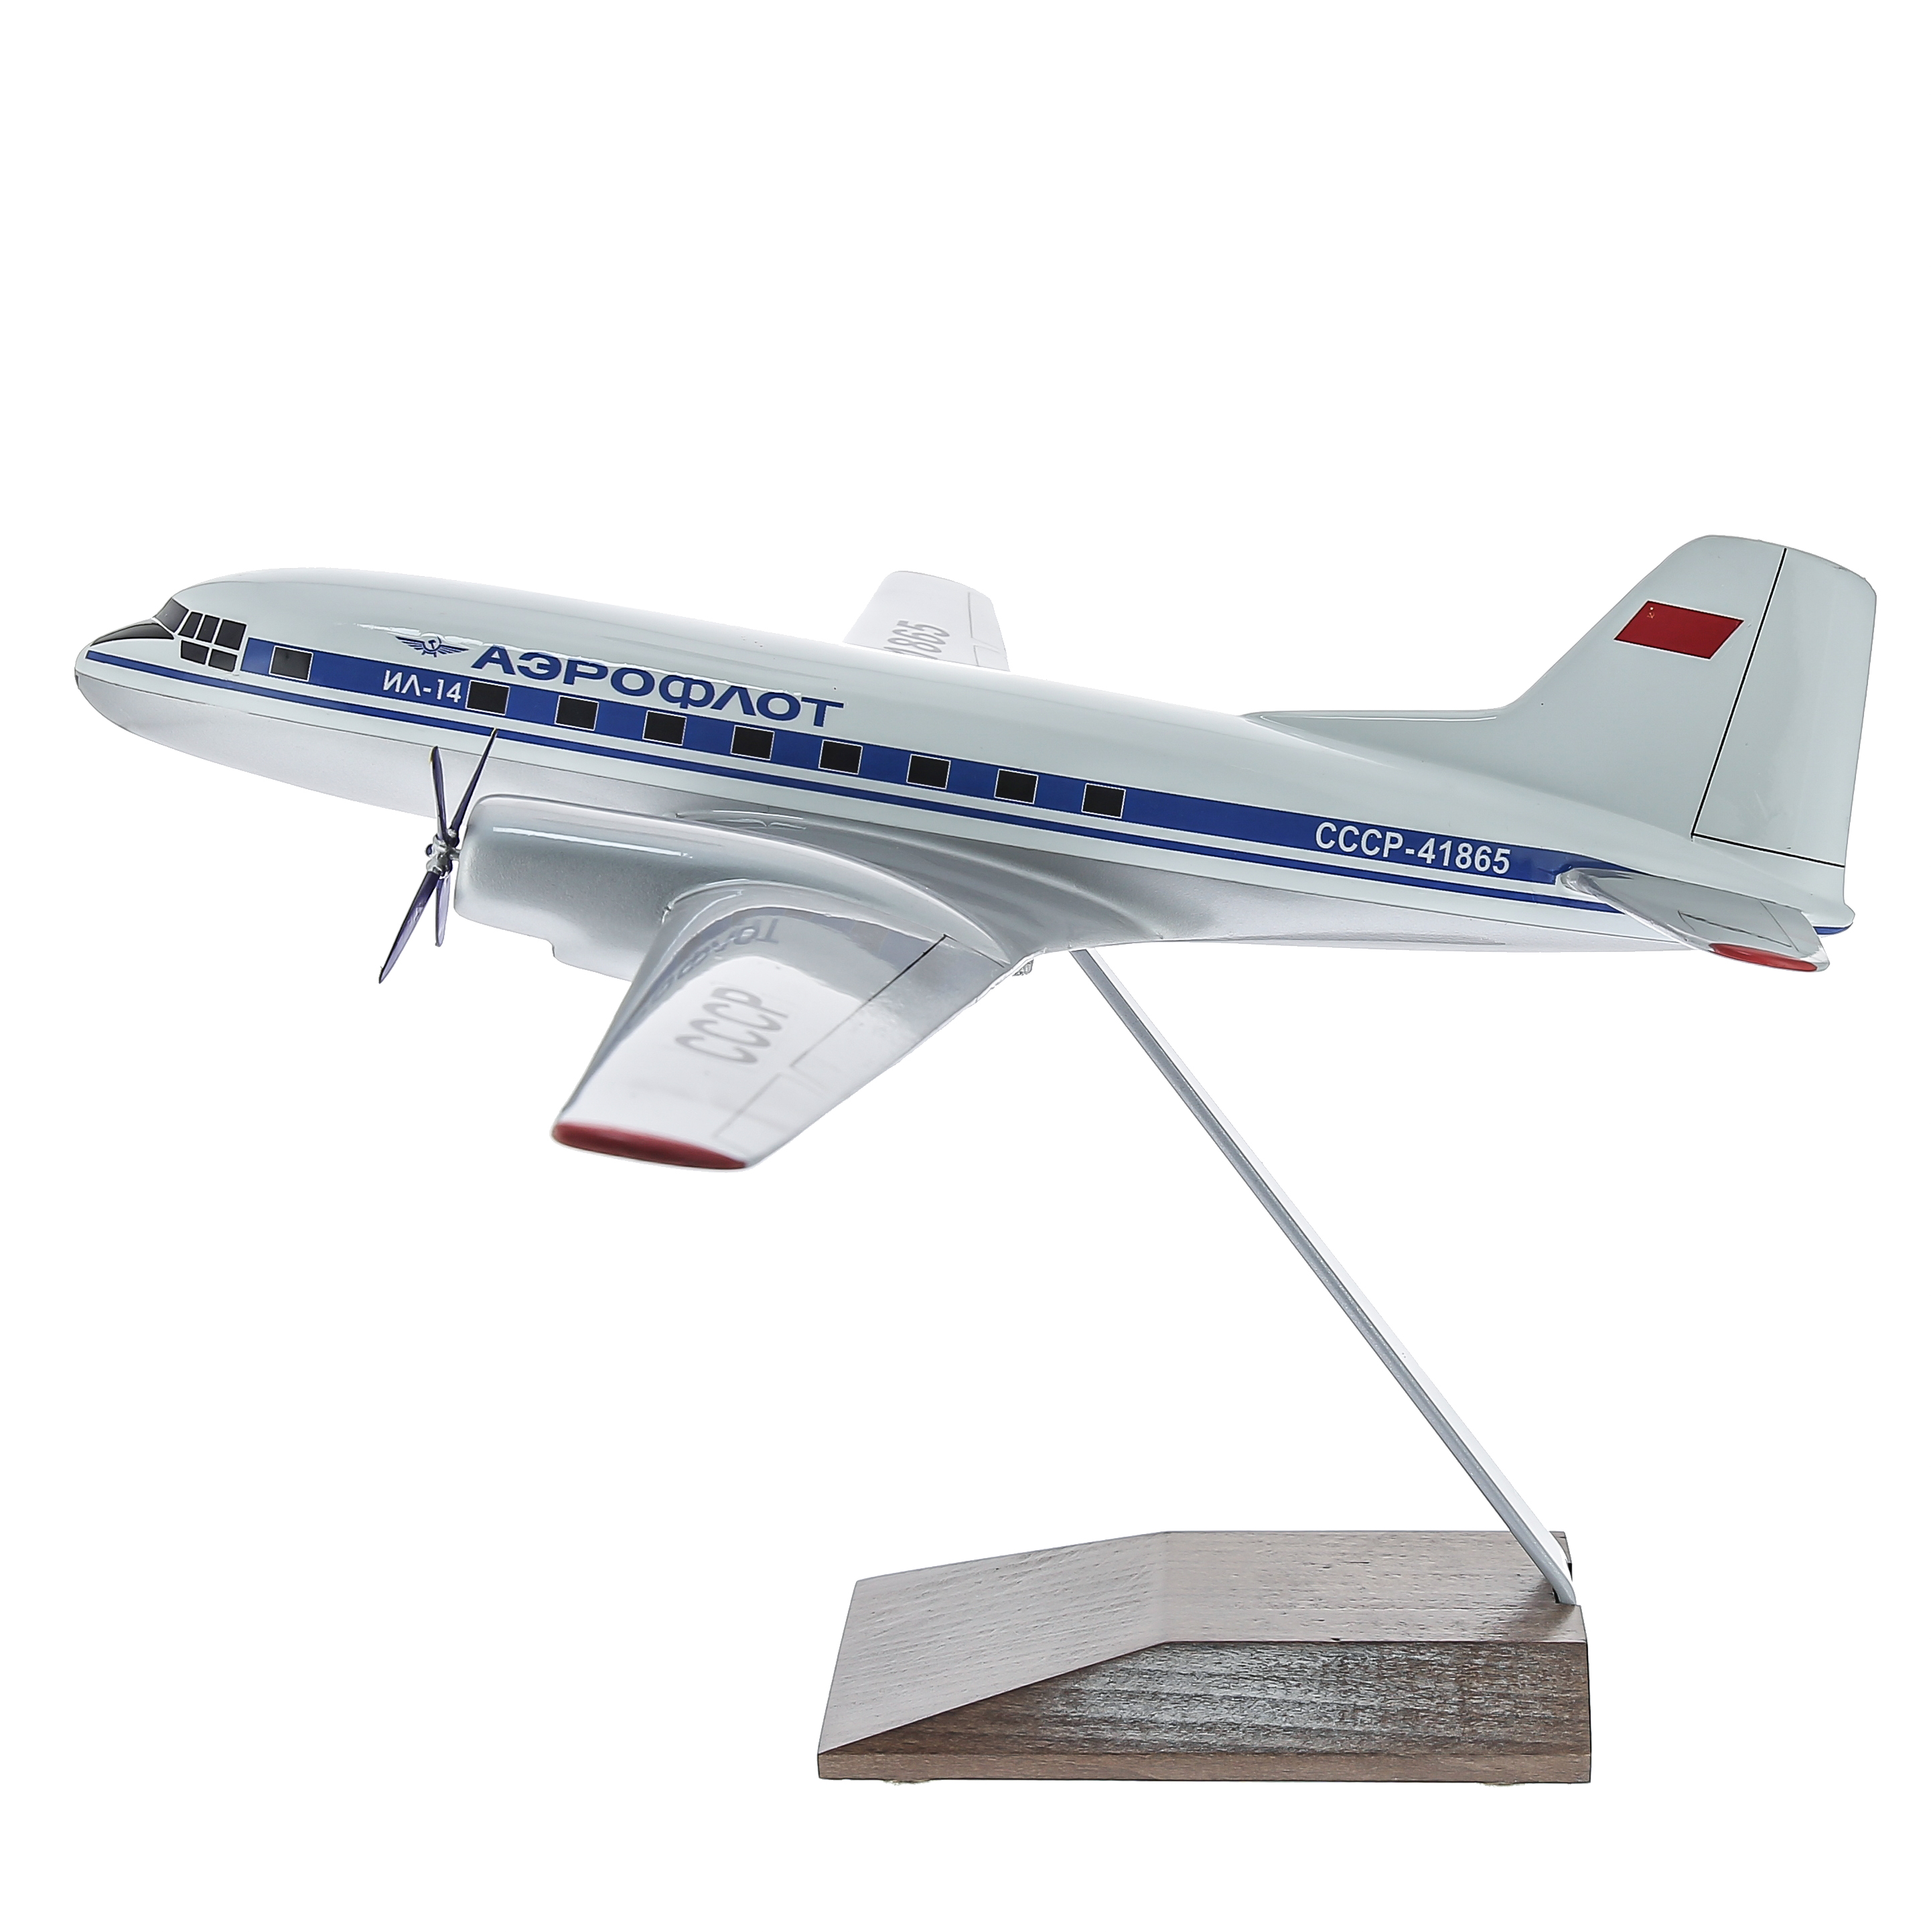 Сборные модели из дерева: корабли, самолеты, кареты | Хоббі Маркет taimyr-expo.ru